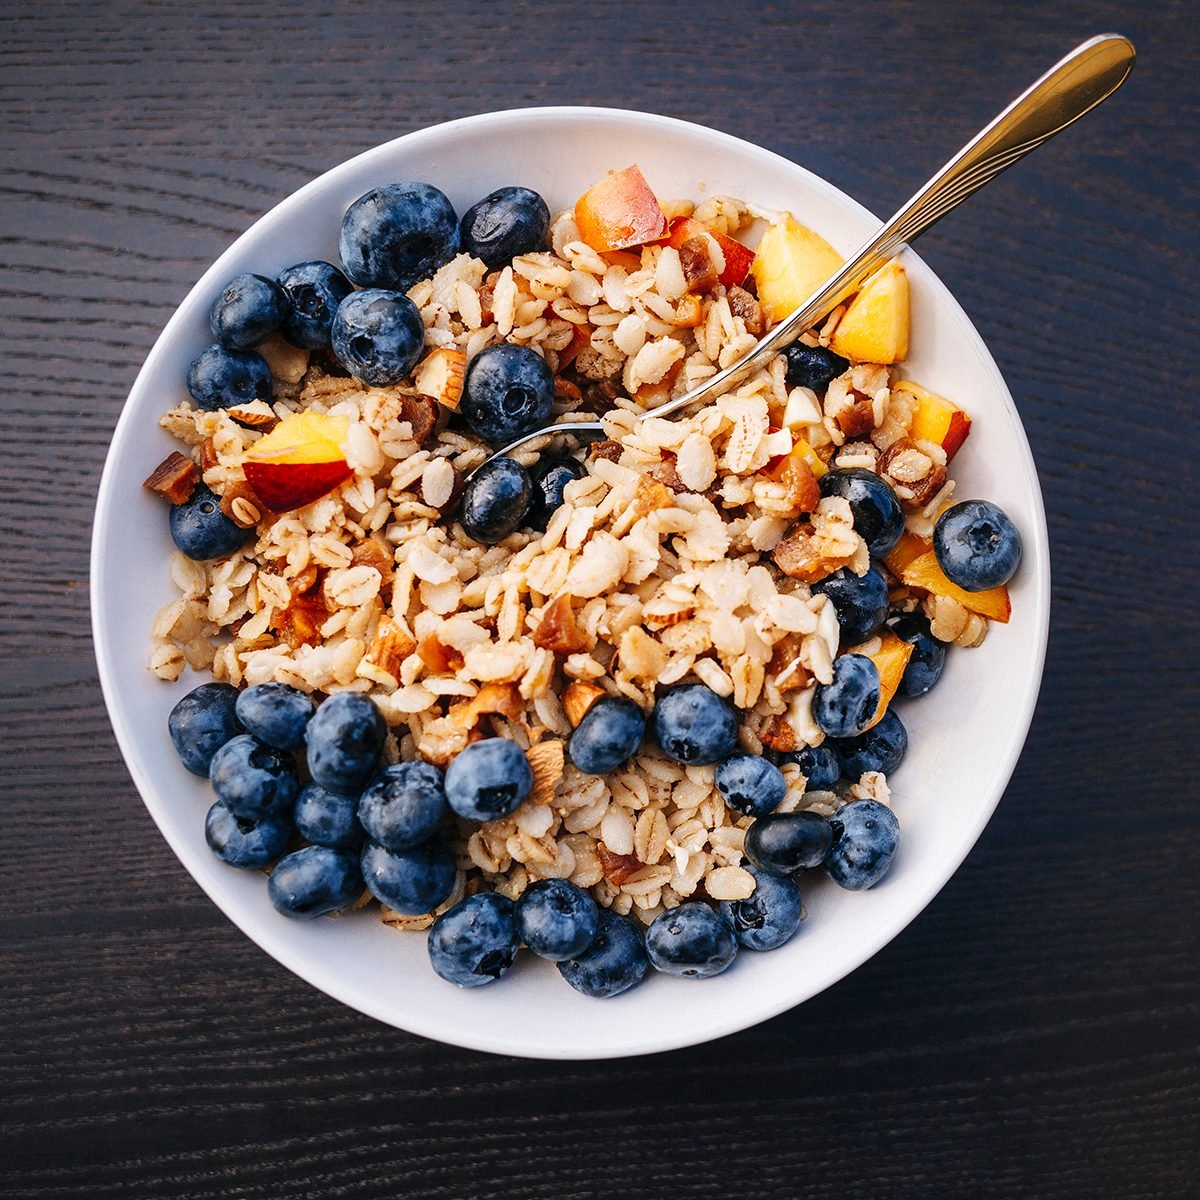 https://www.tasteofhome.com/wp-content/uploads/2020/02/healthy-breakfast-organic-porridge-with-fruits-GettyImages-1007993400.jpg?fit=700%2C700